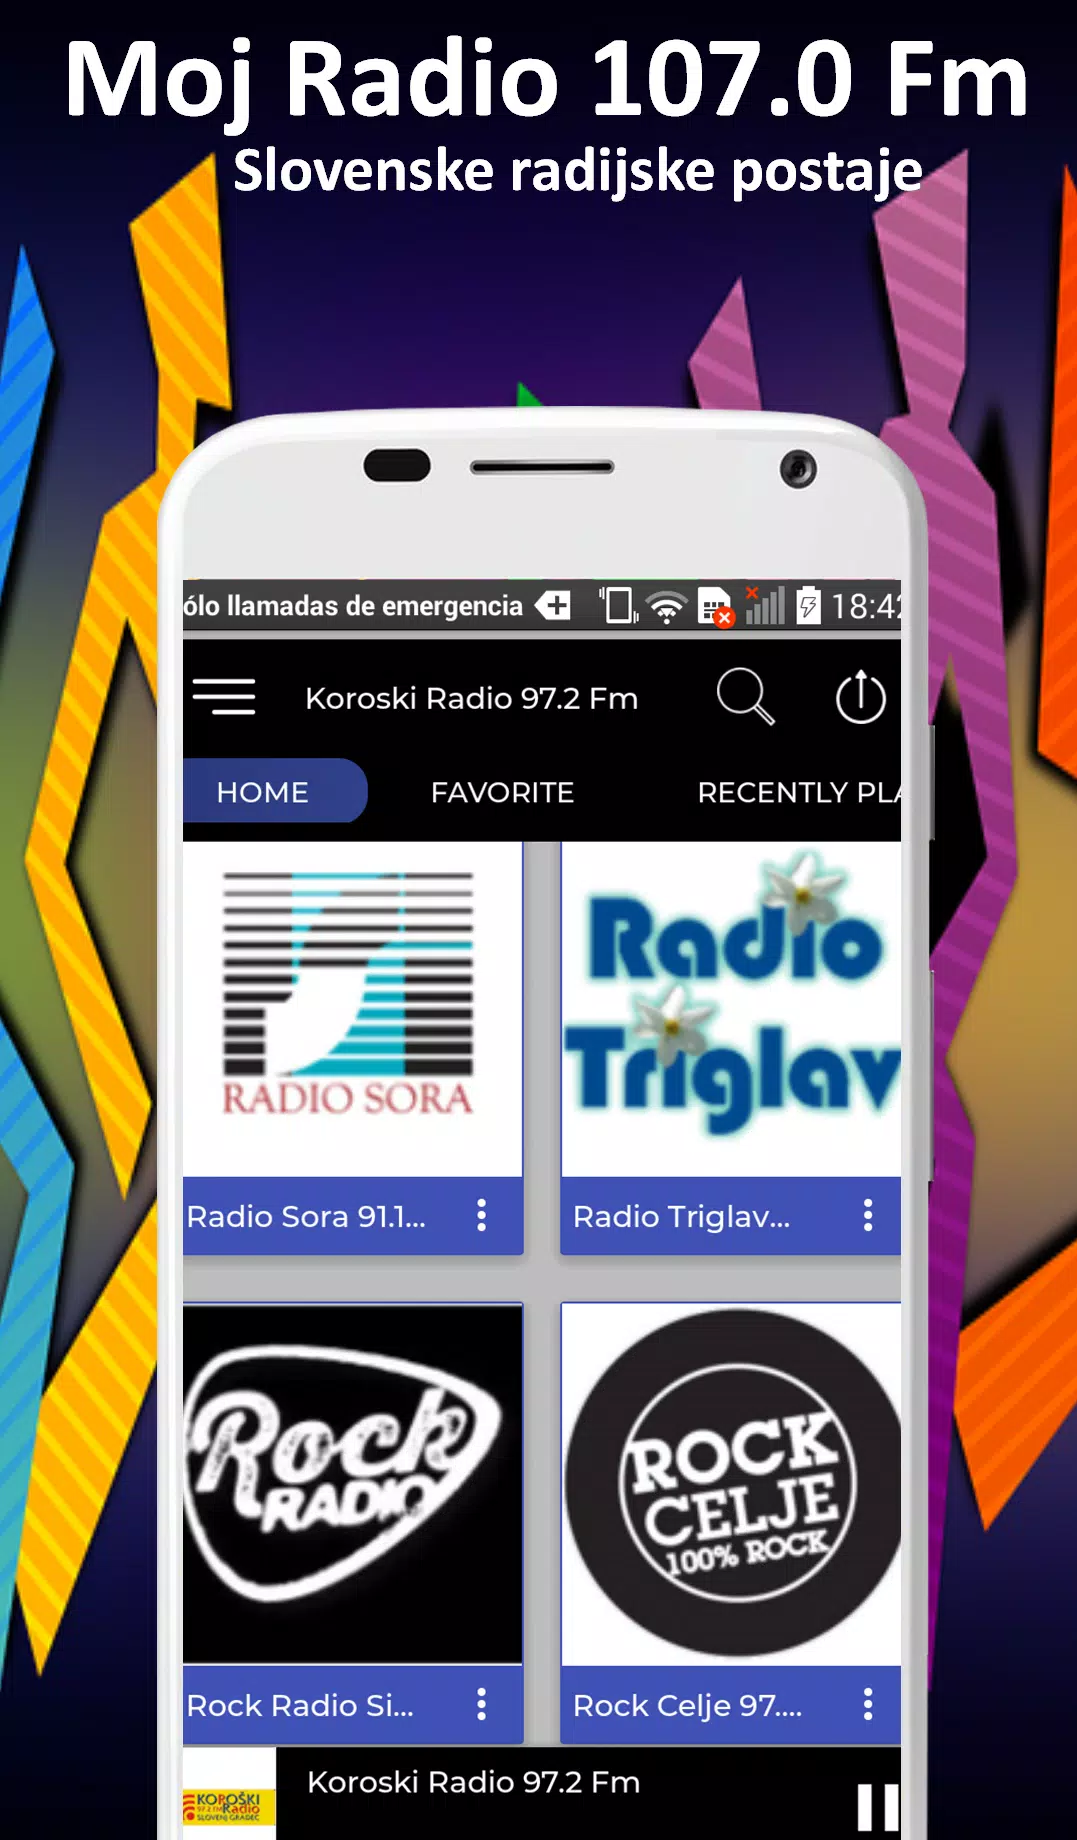 Moj Radio 107.0 Fm SLOVENIA for Android - APK Download